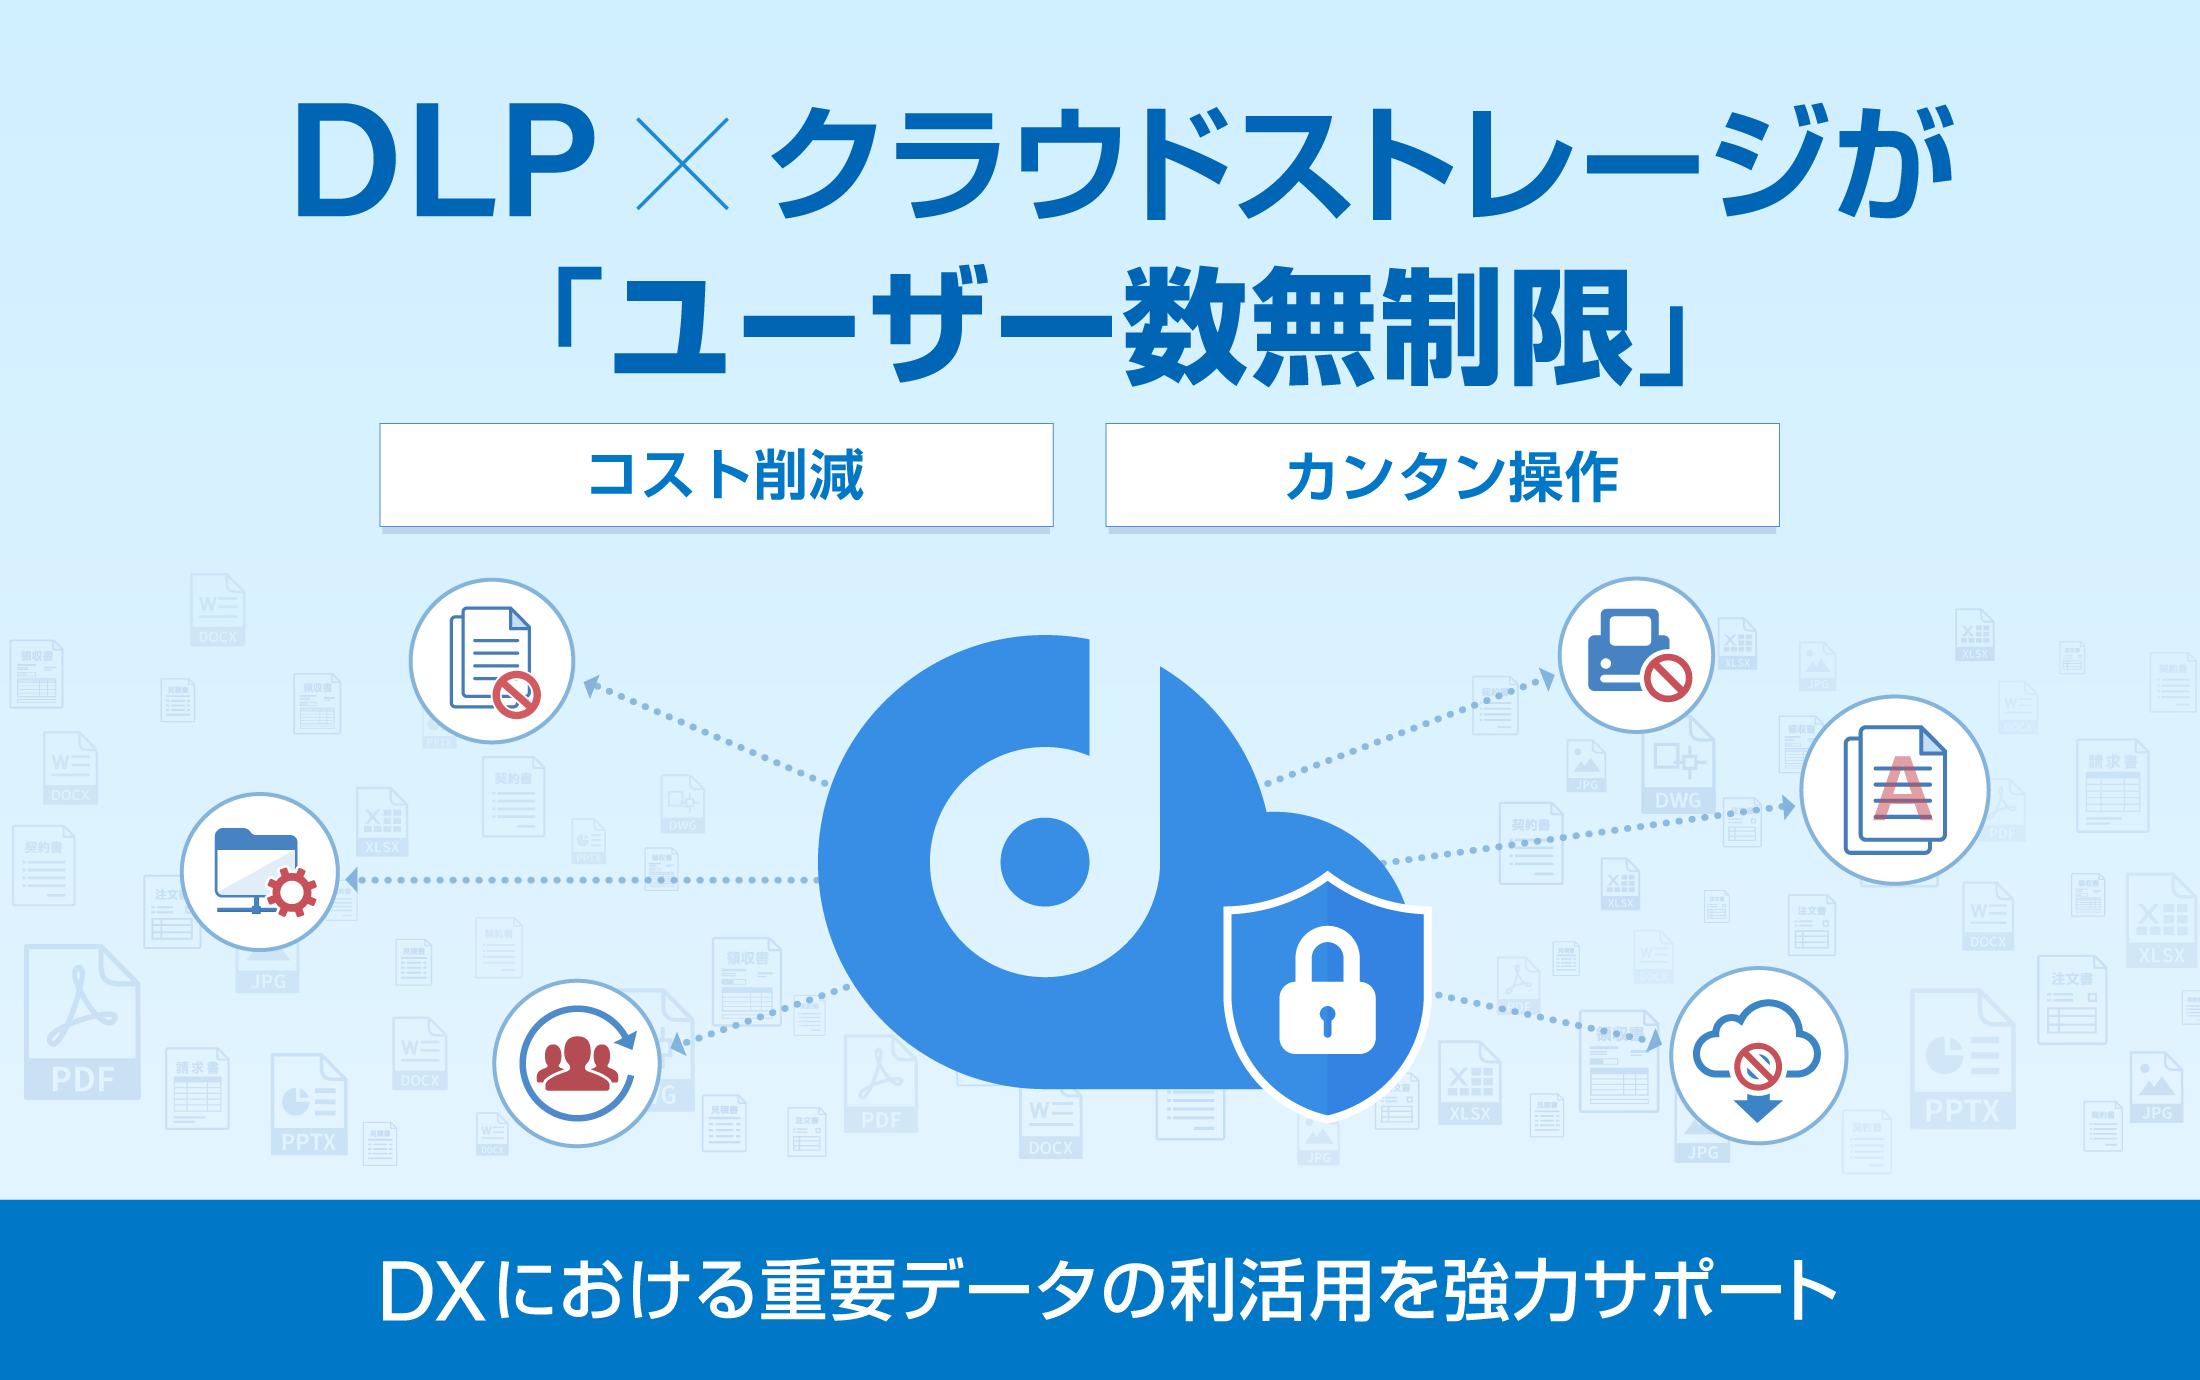 DLP ✕ クラウドストレージが「ユーザー数無制限」DirectCloud-SHIELD DLP